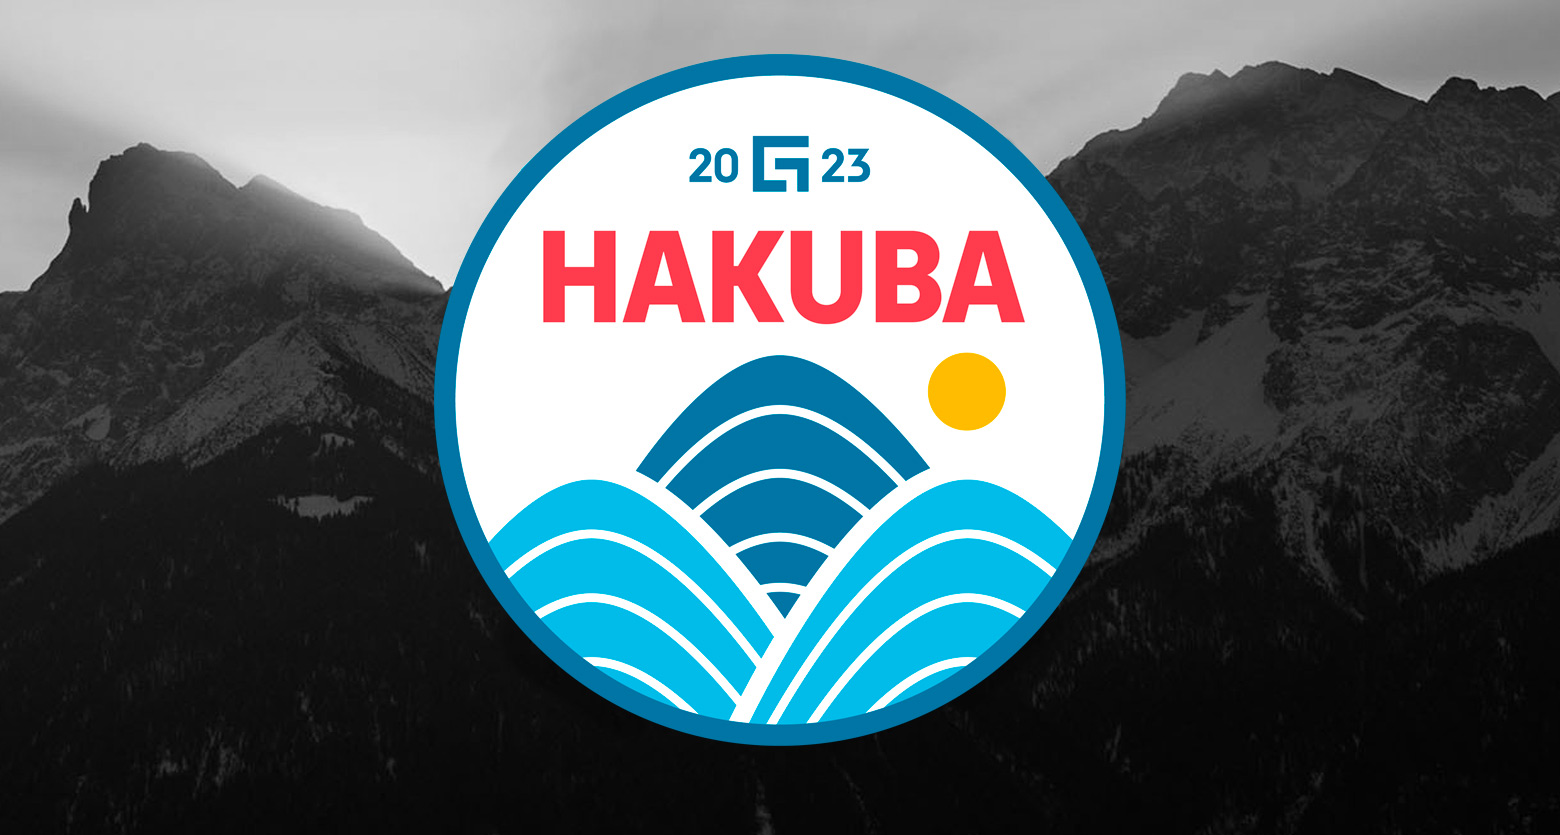 engineering-blog-hero--hakuba--1550x835